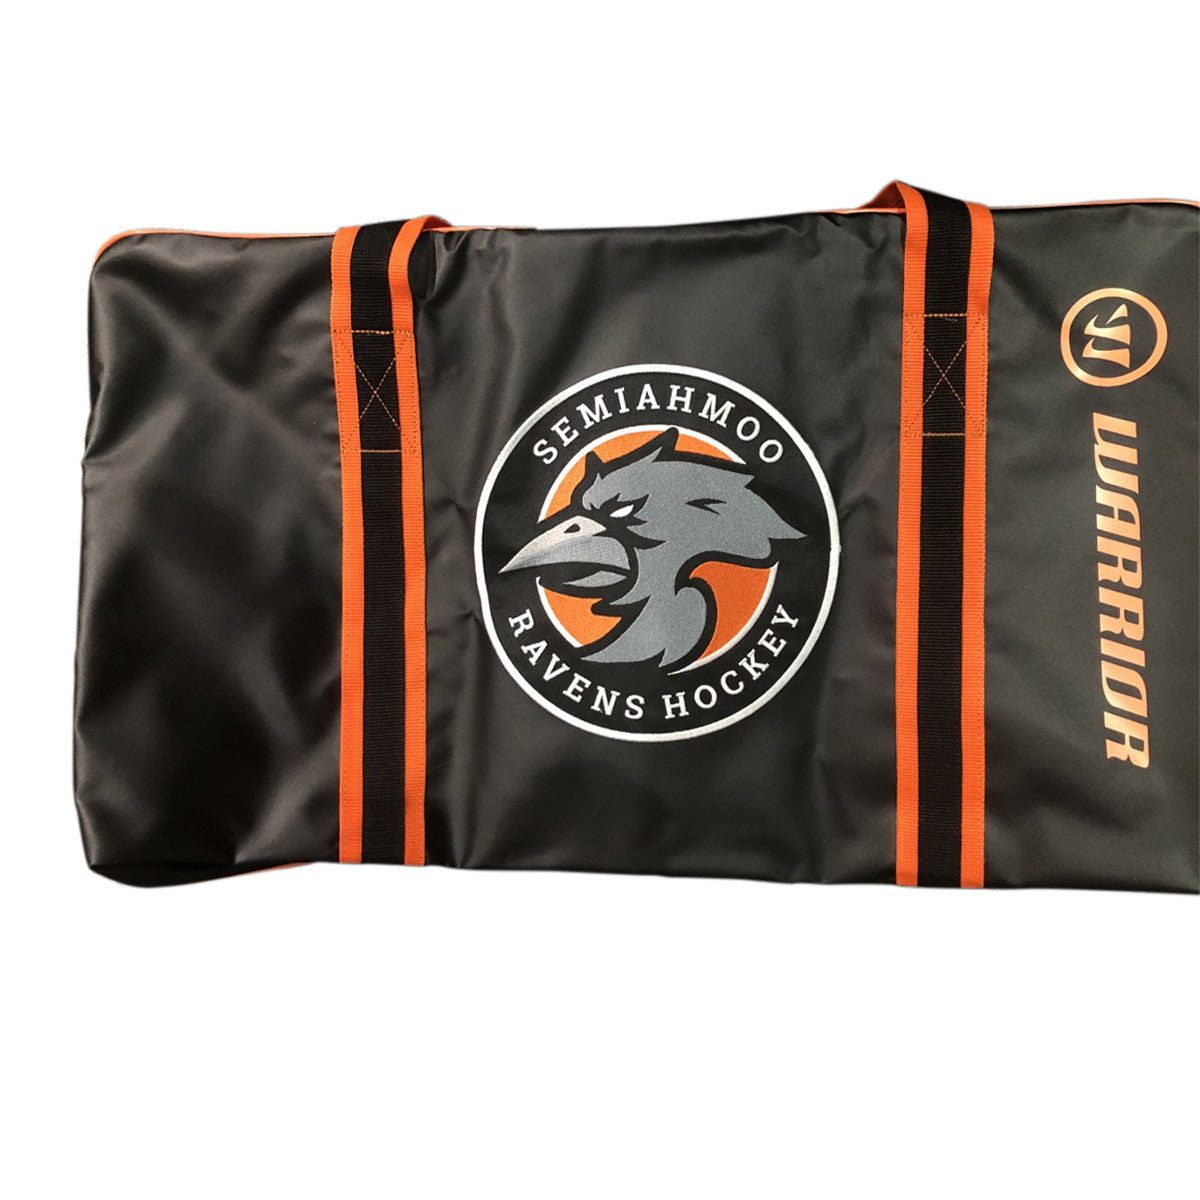 Semiahmoo Ravens -- Warrior Intermediate Bag